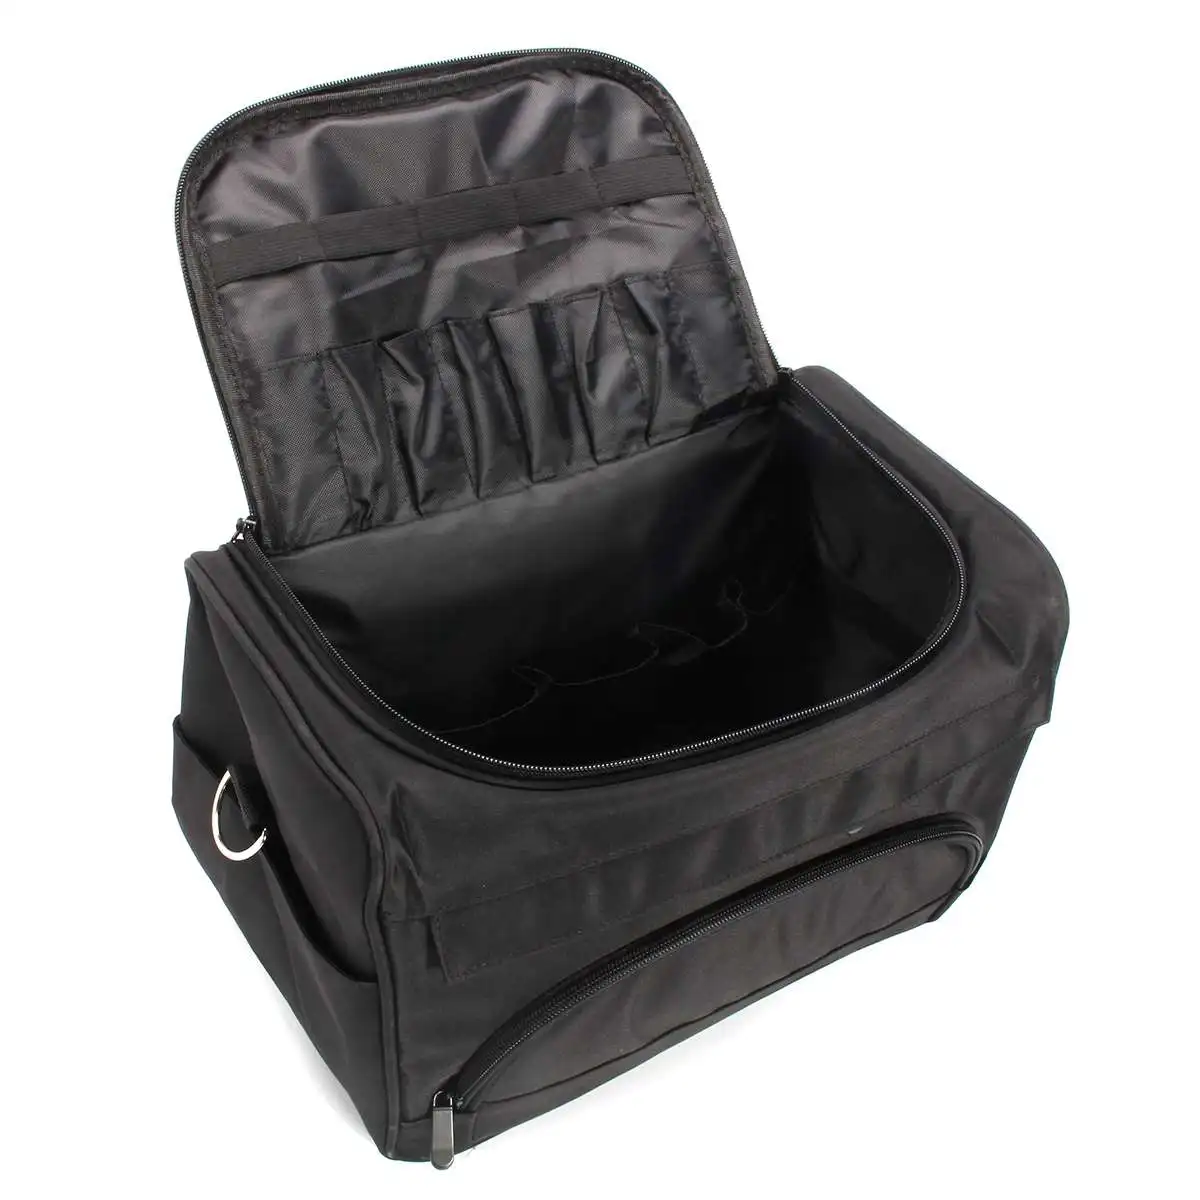 Kotak Organizer profesional tas Clapboard multilapis kualitas tinggi tas penyimpanan kapasitas besar koper